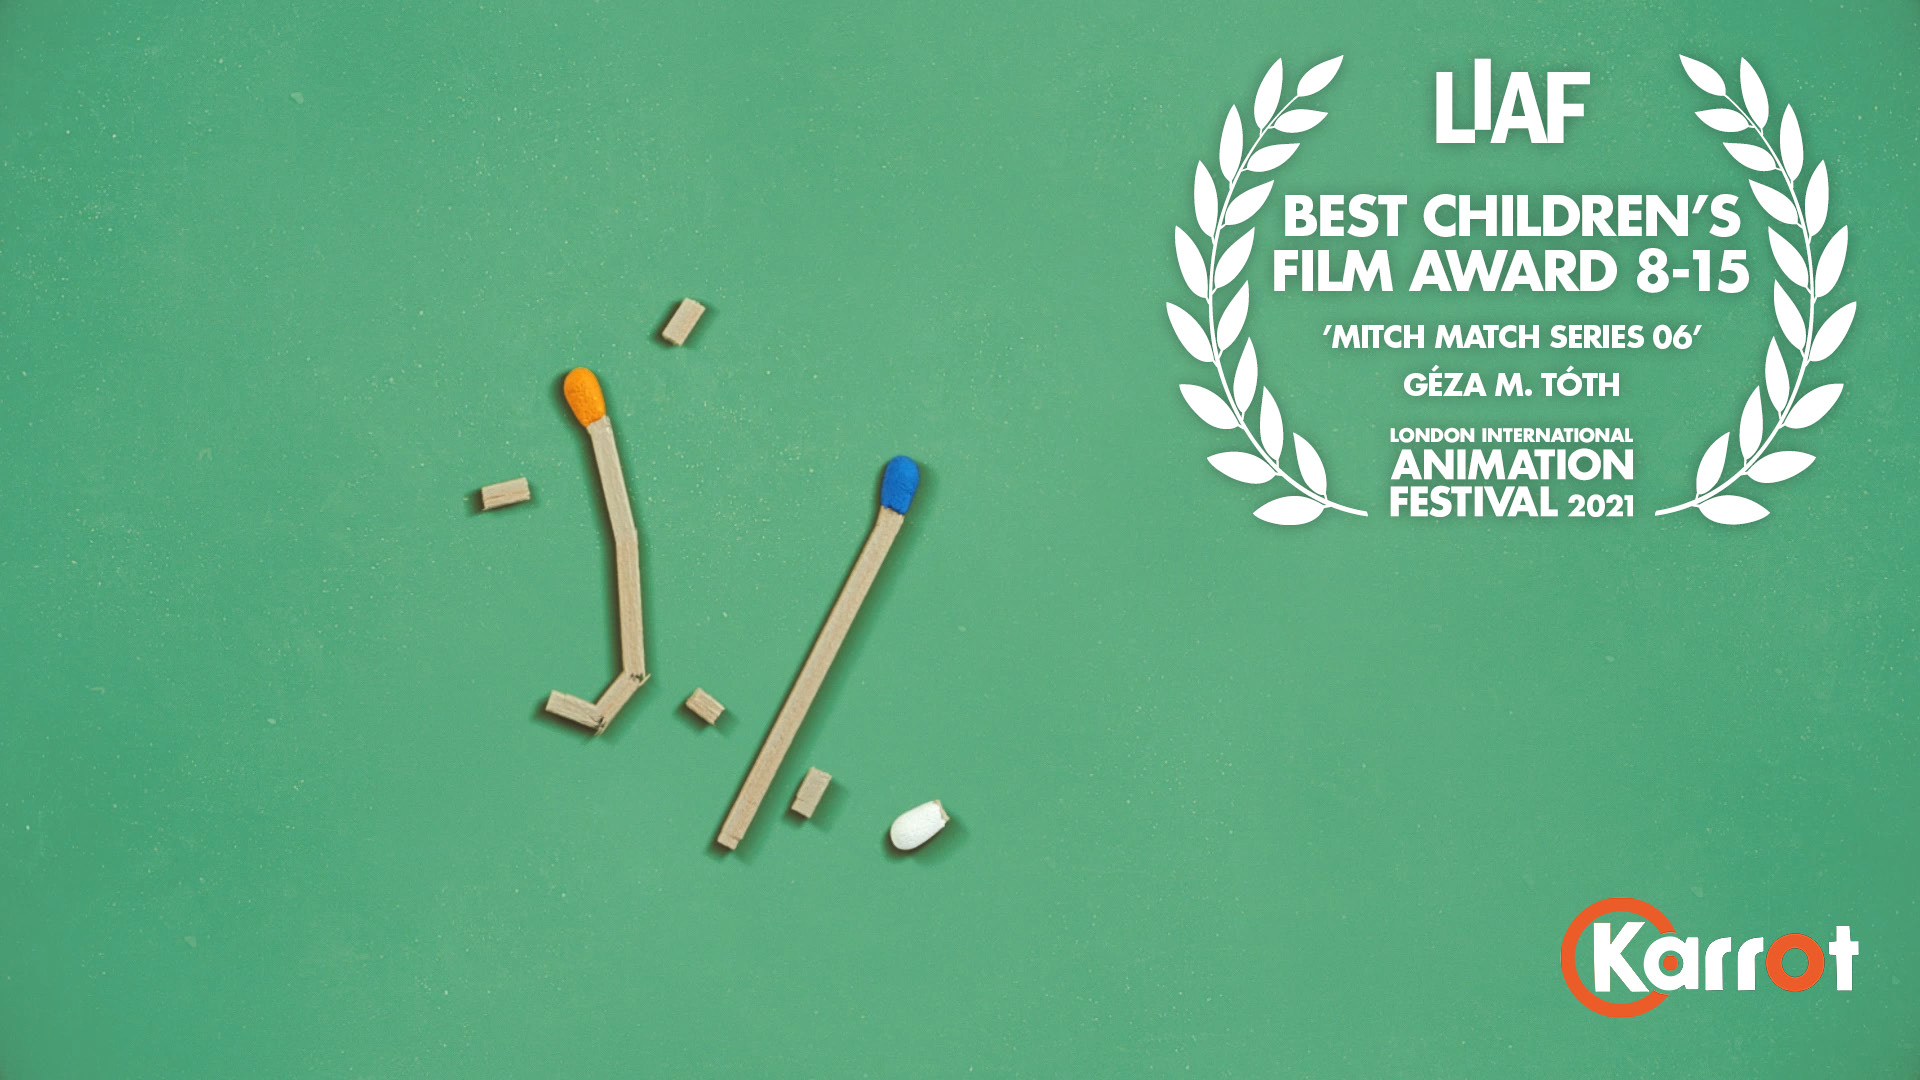 Best Children's Film Award 8-15 year olds, Mitch Match Series 06, Géza M. Tóth, LIAF, London International Animation Festival